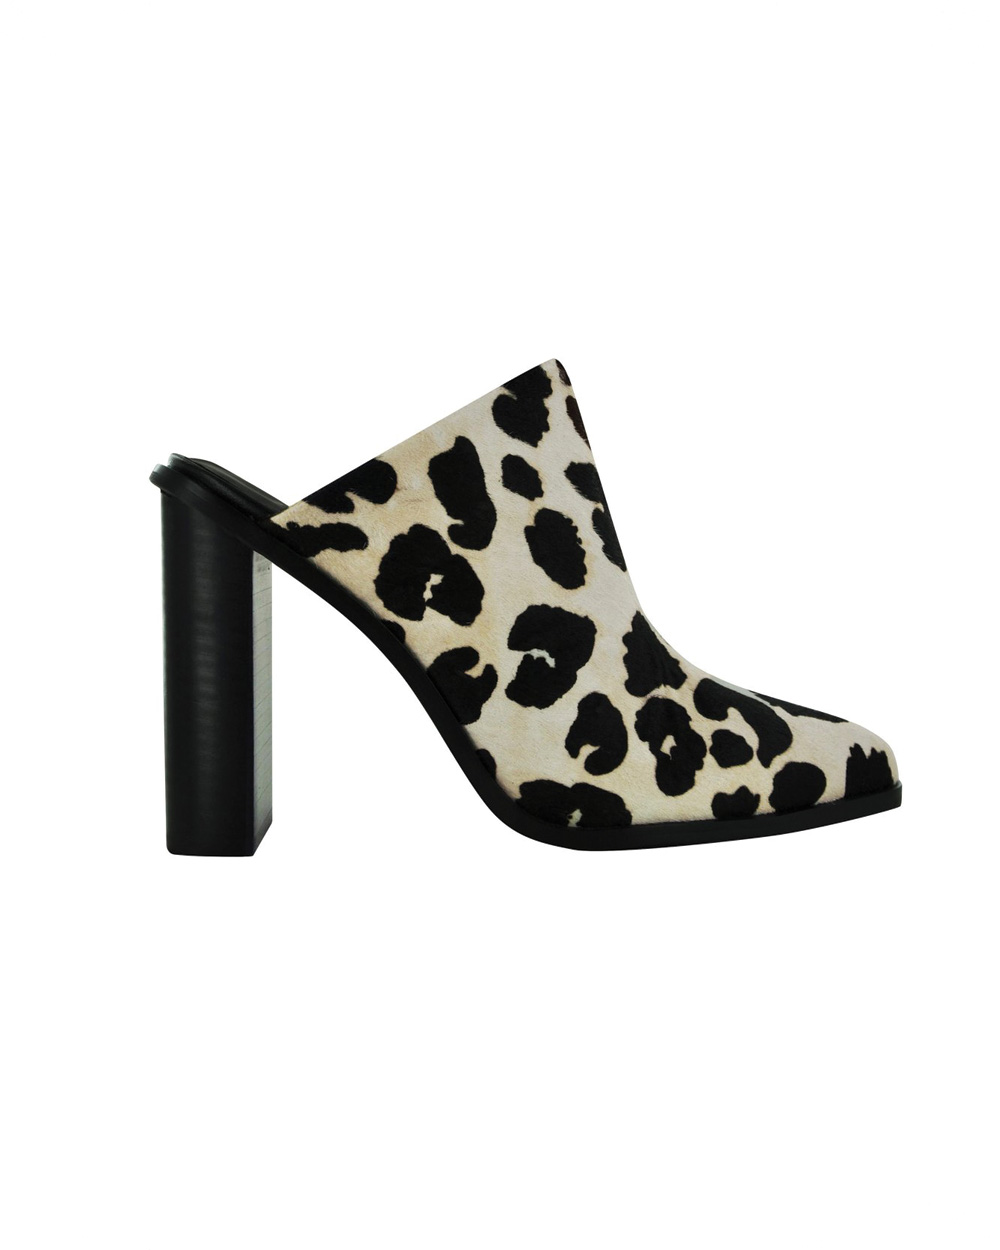 Senso heels, $294.29